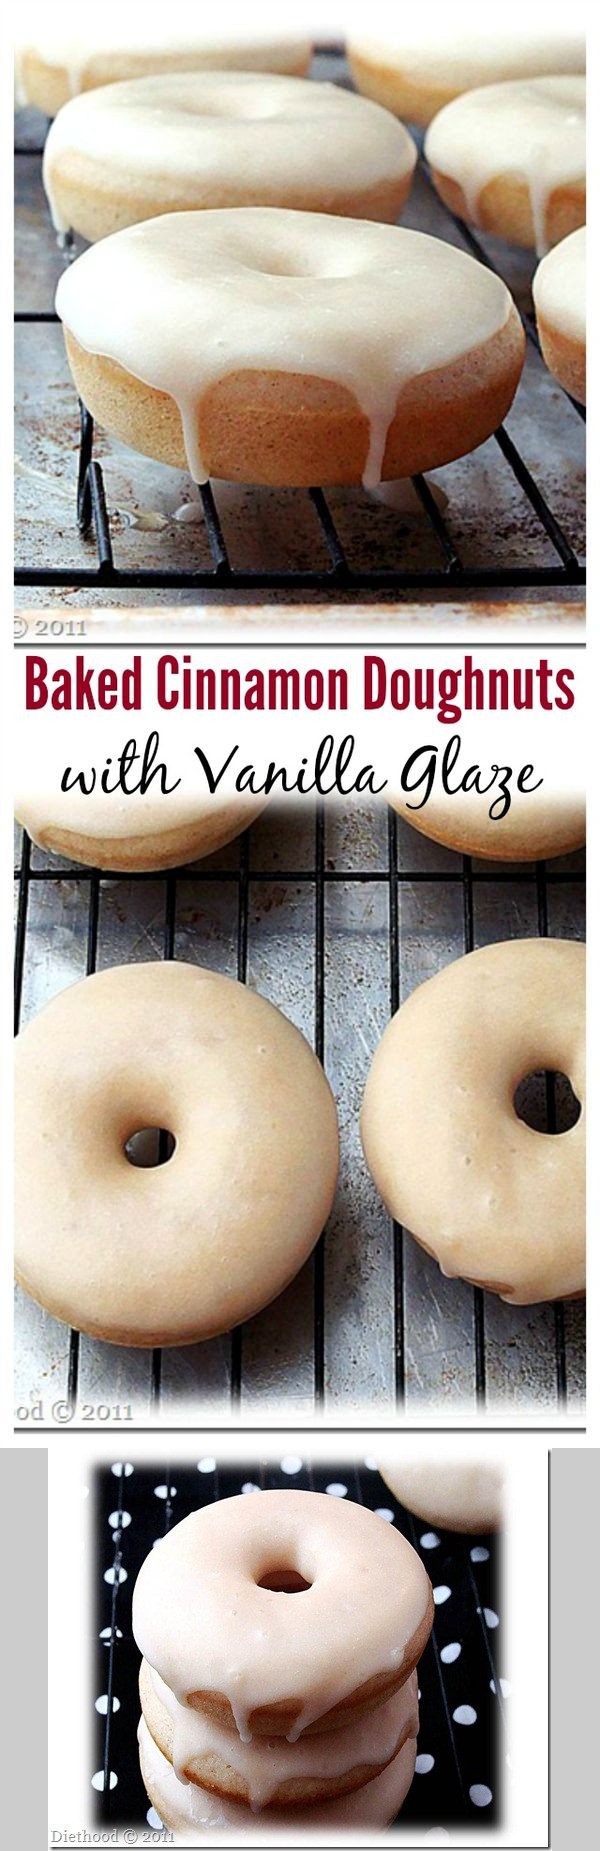 Baked Cinnamon Doughnuts with Vanilla Glaze